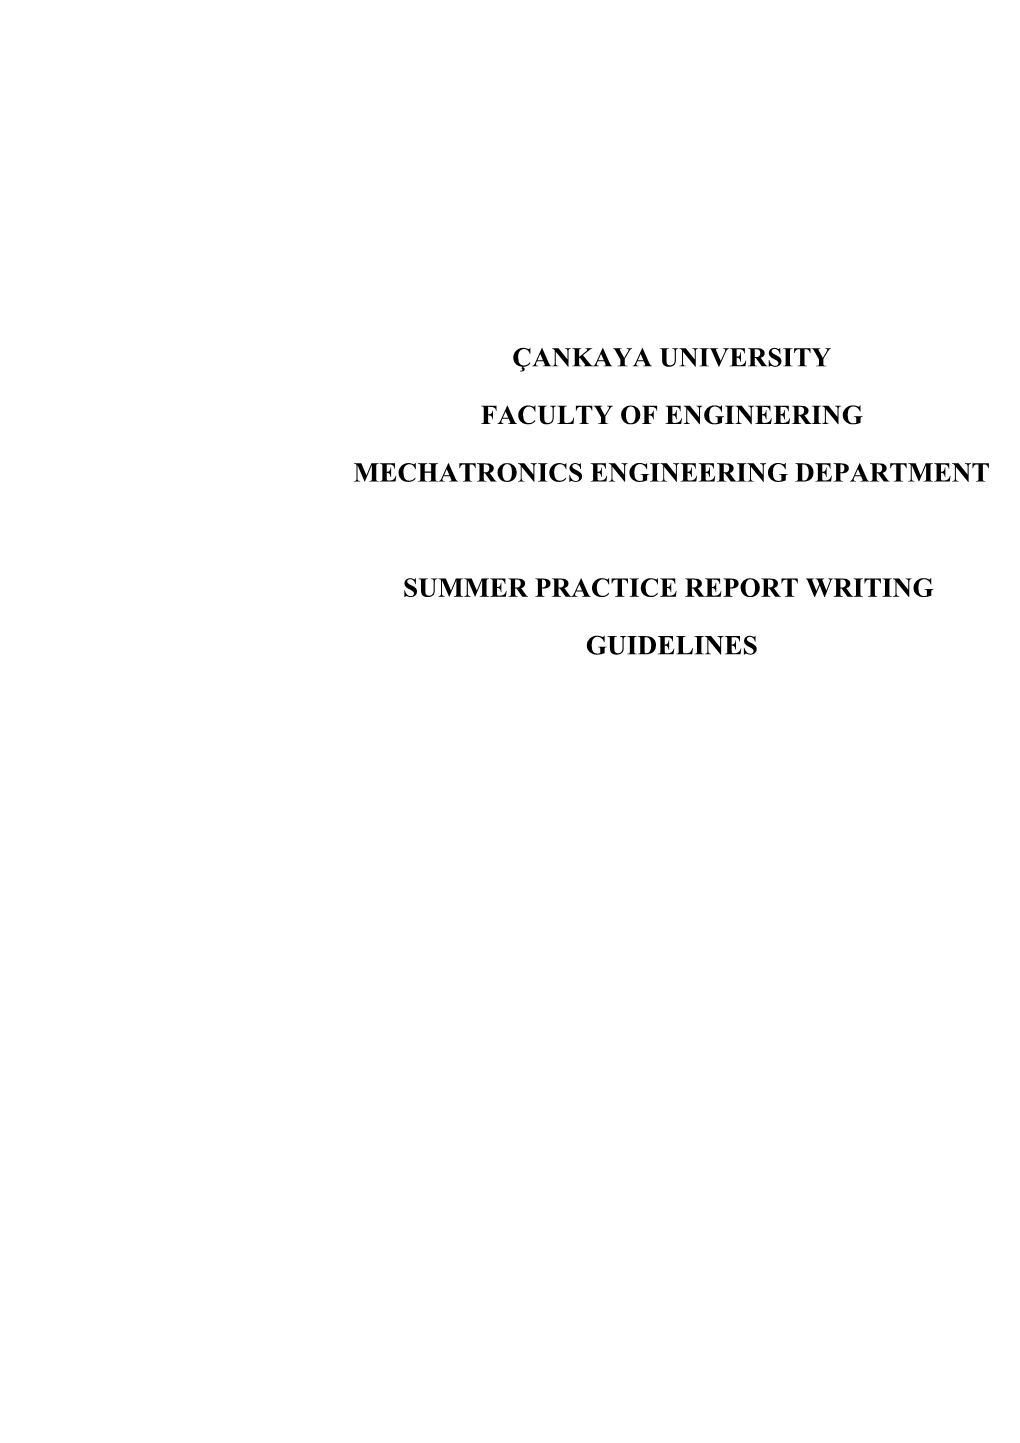 I. Summer Practicereport Writing Guidelines 3